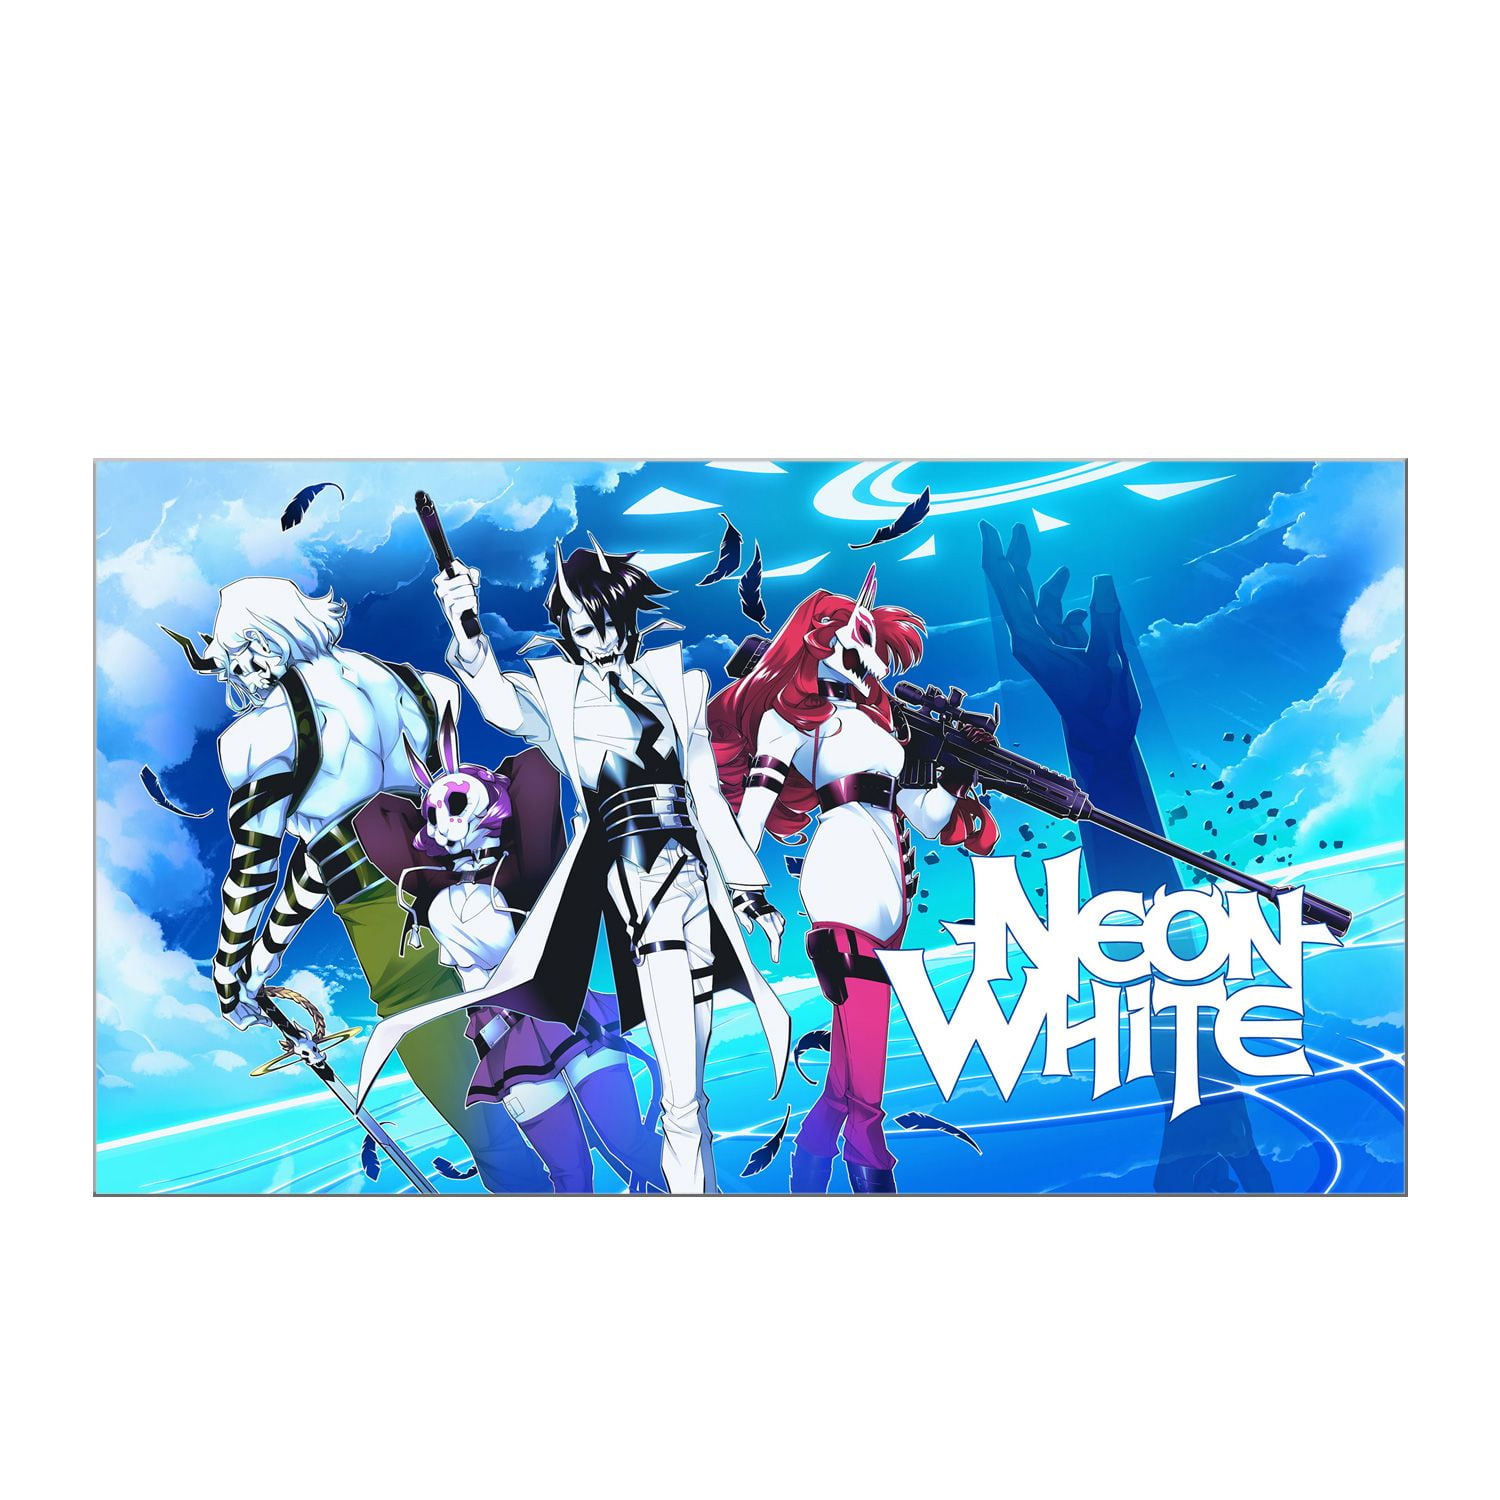 Neon White/Nintendo Switch/eShop Download